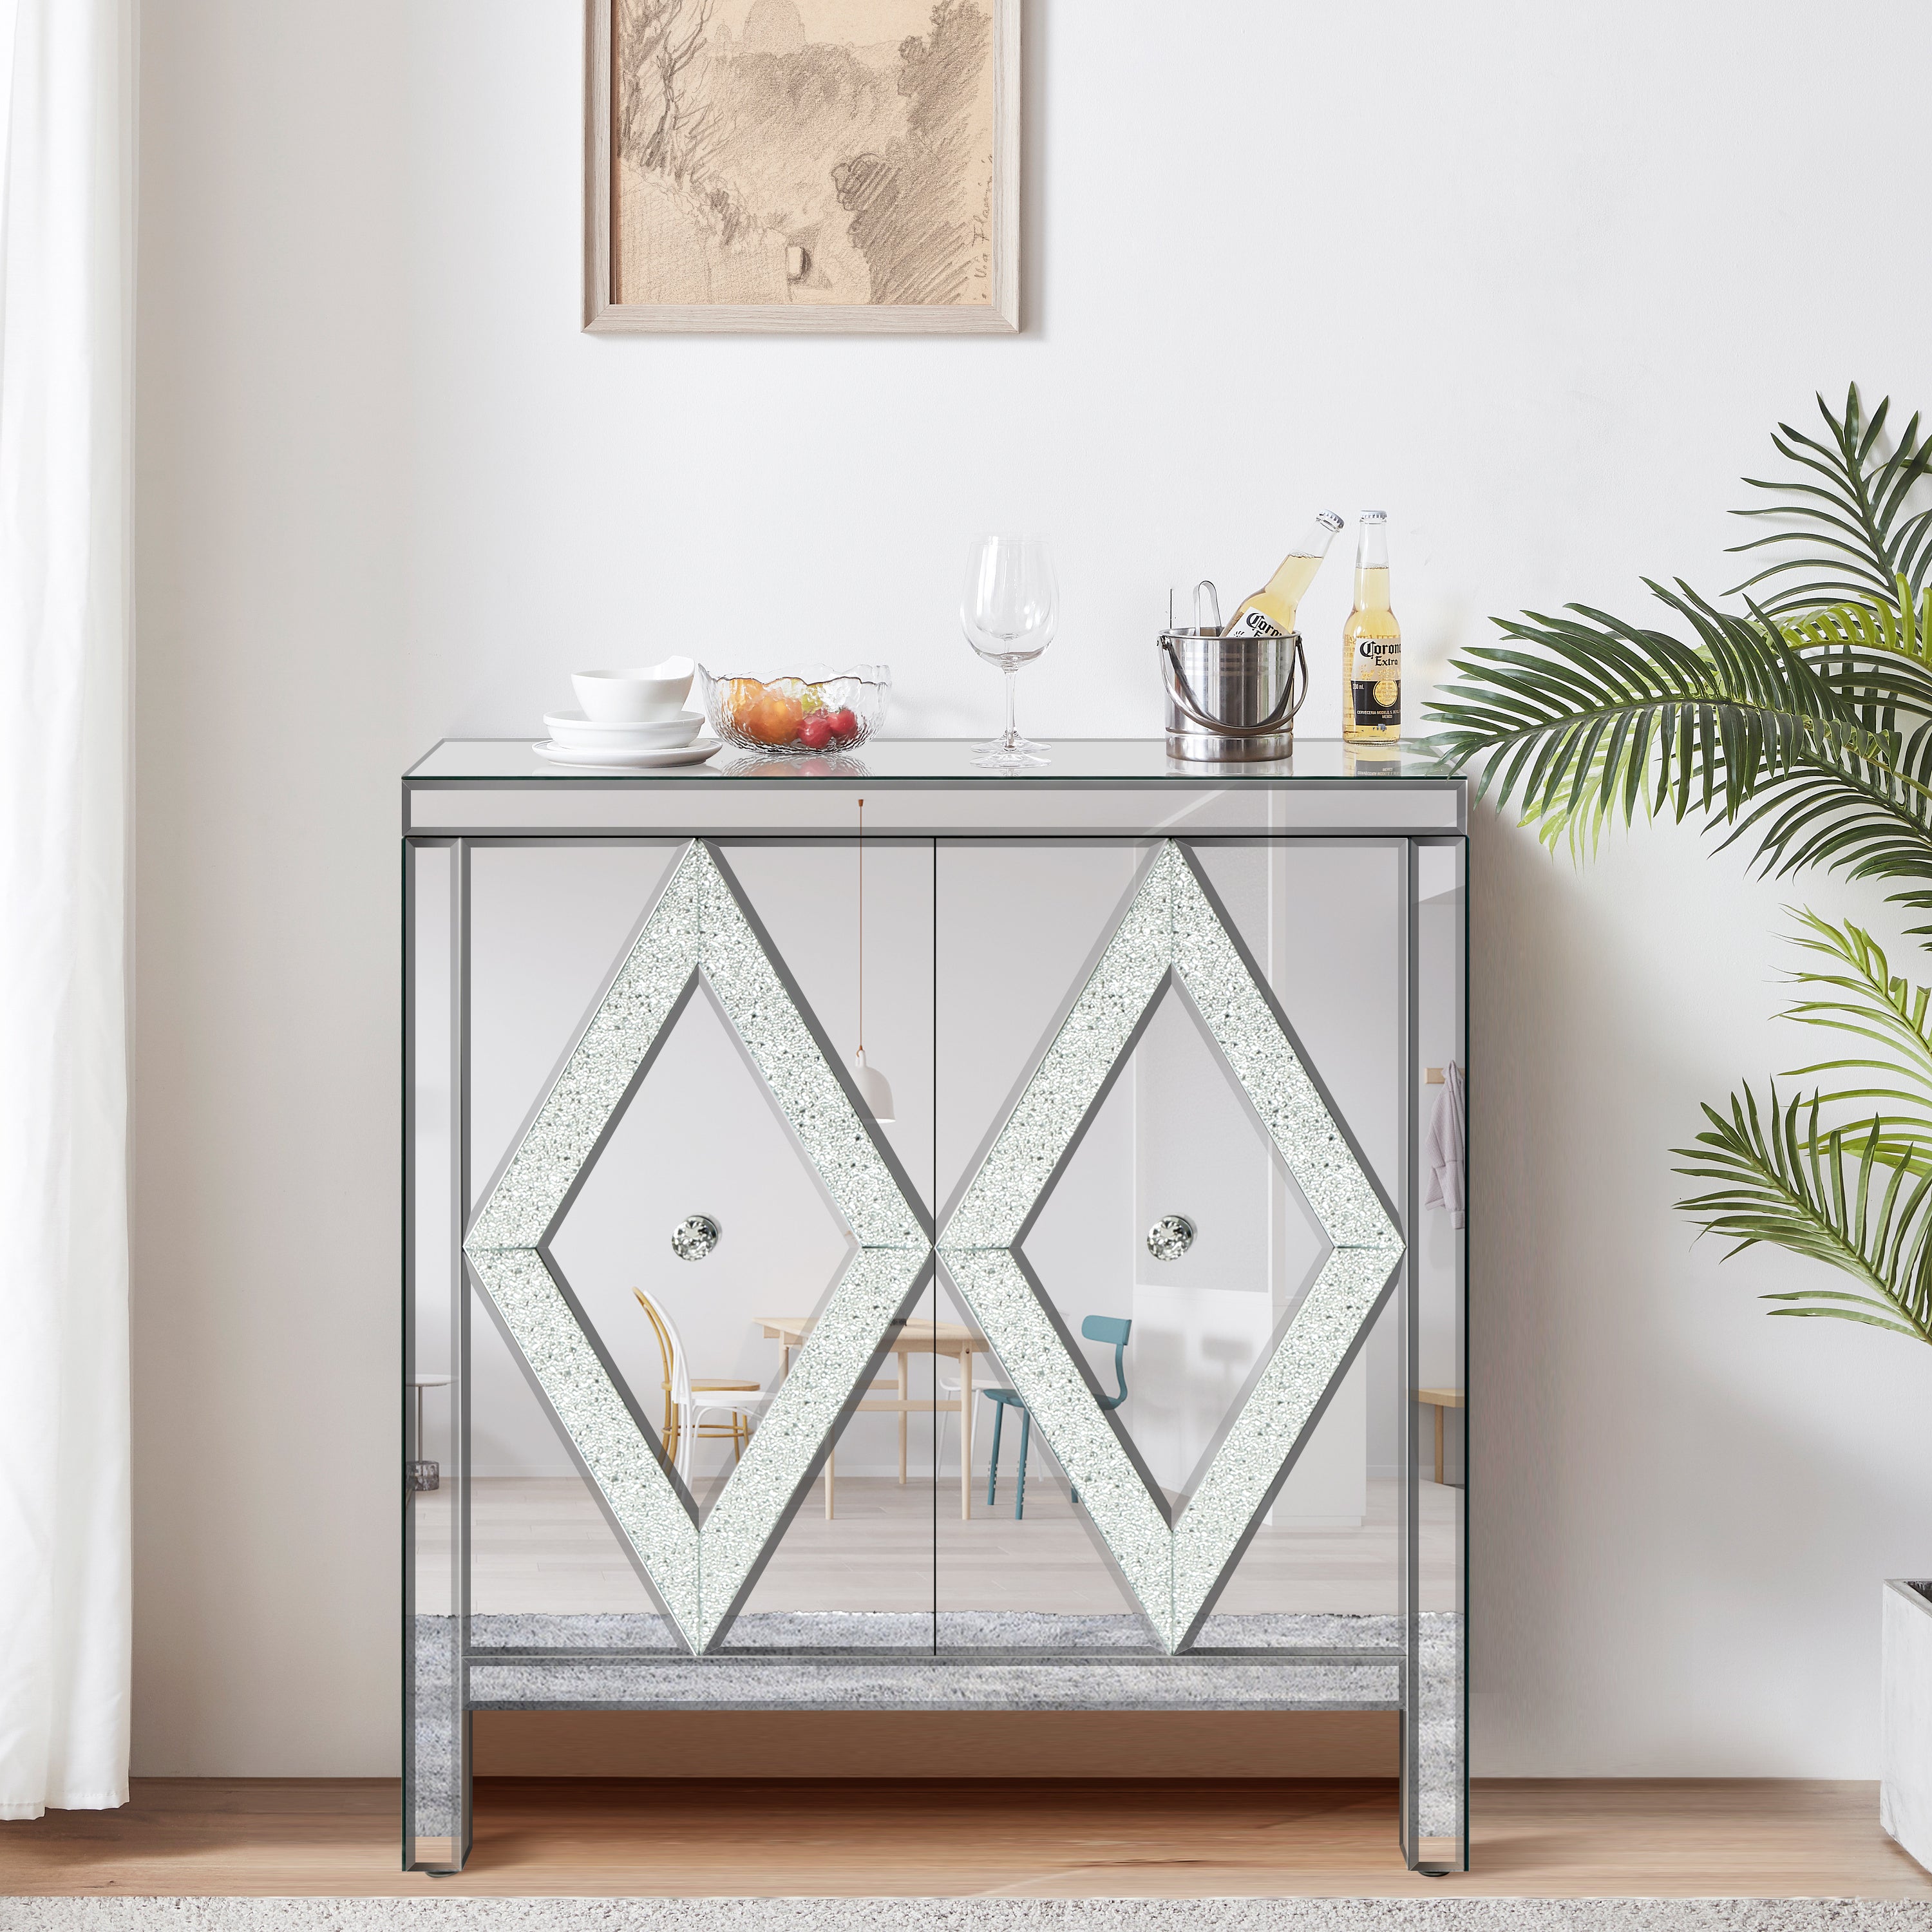 31.5" Storage Mirrored Cabinet with Diamond Shape Design